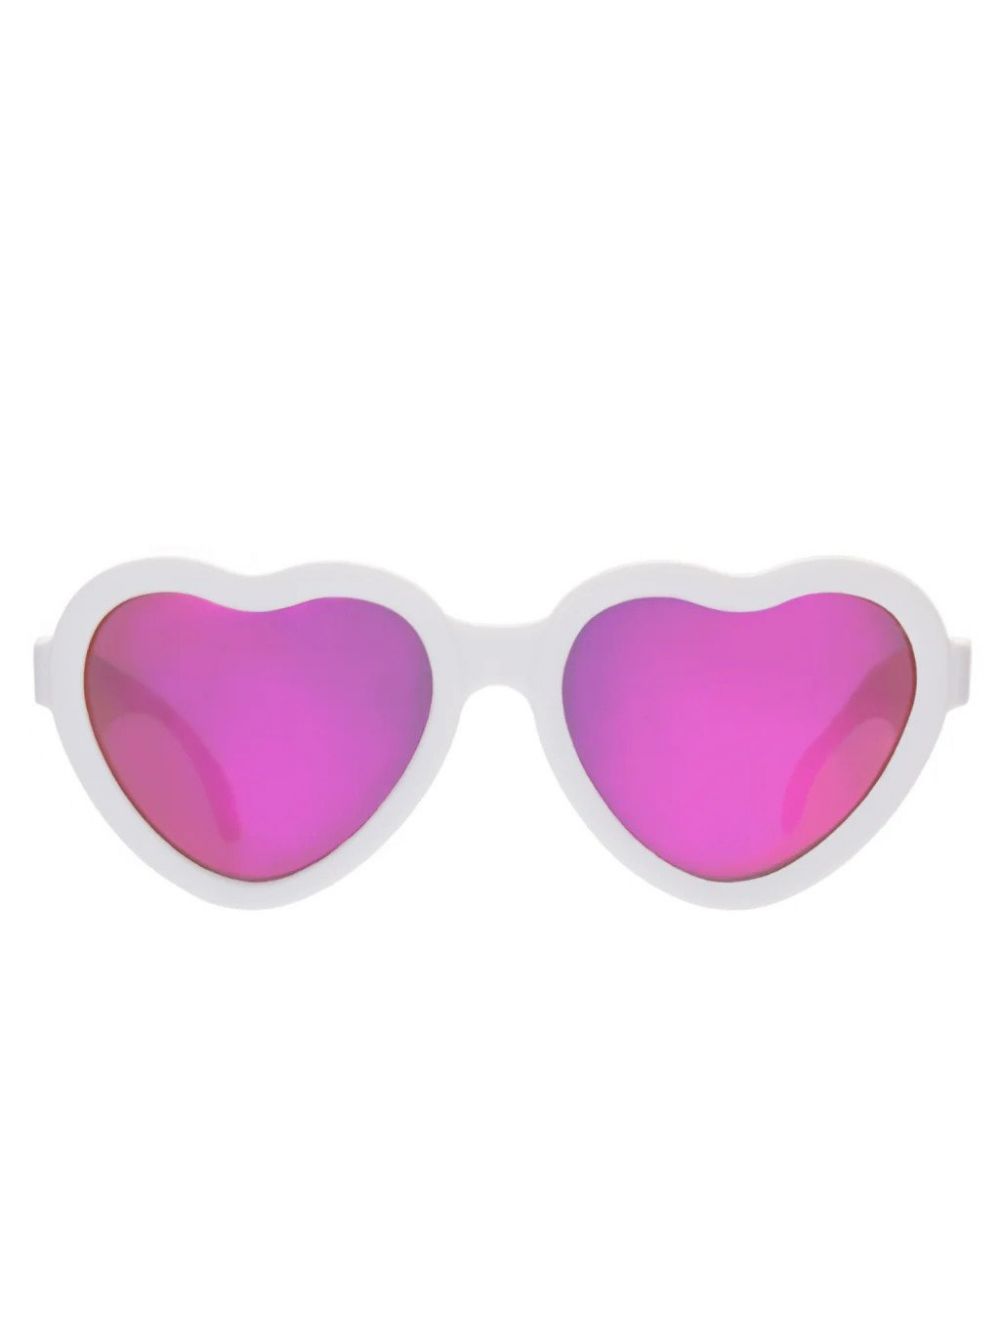 Babiators Heart Non-Polarized Mirrored Sunglasses - The Sweetheart - 0-2  Years